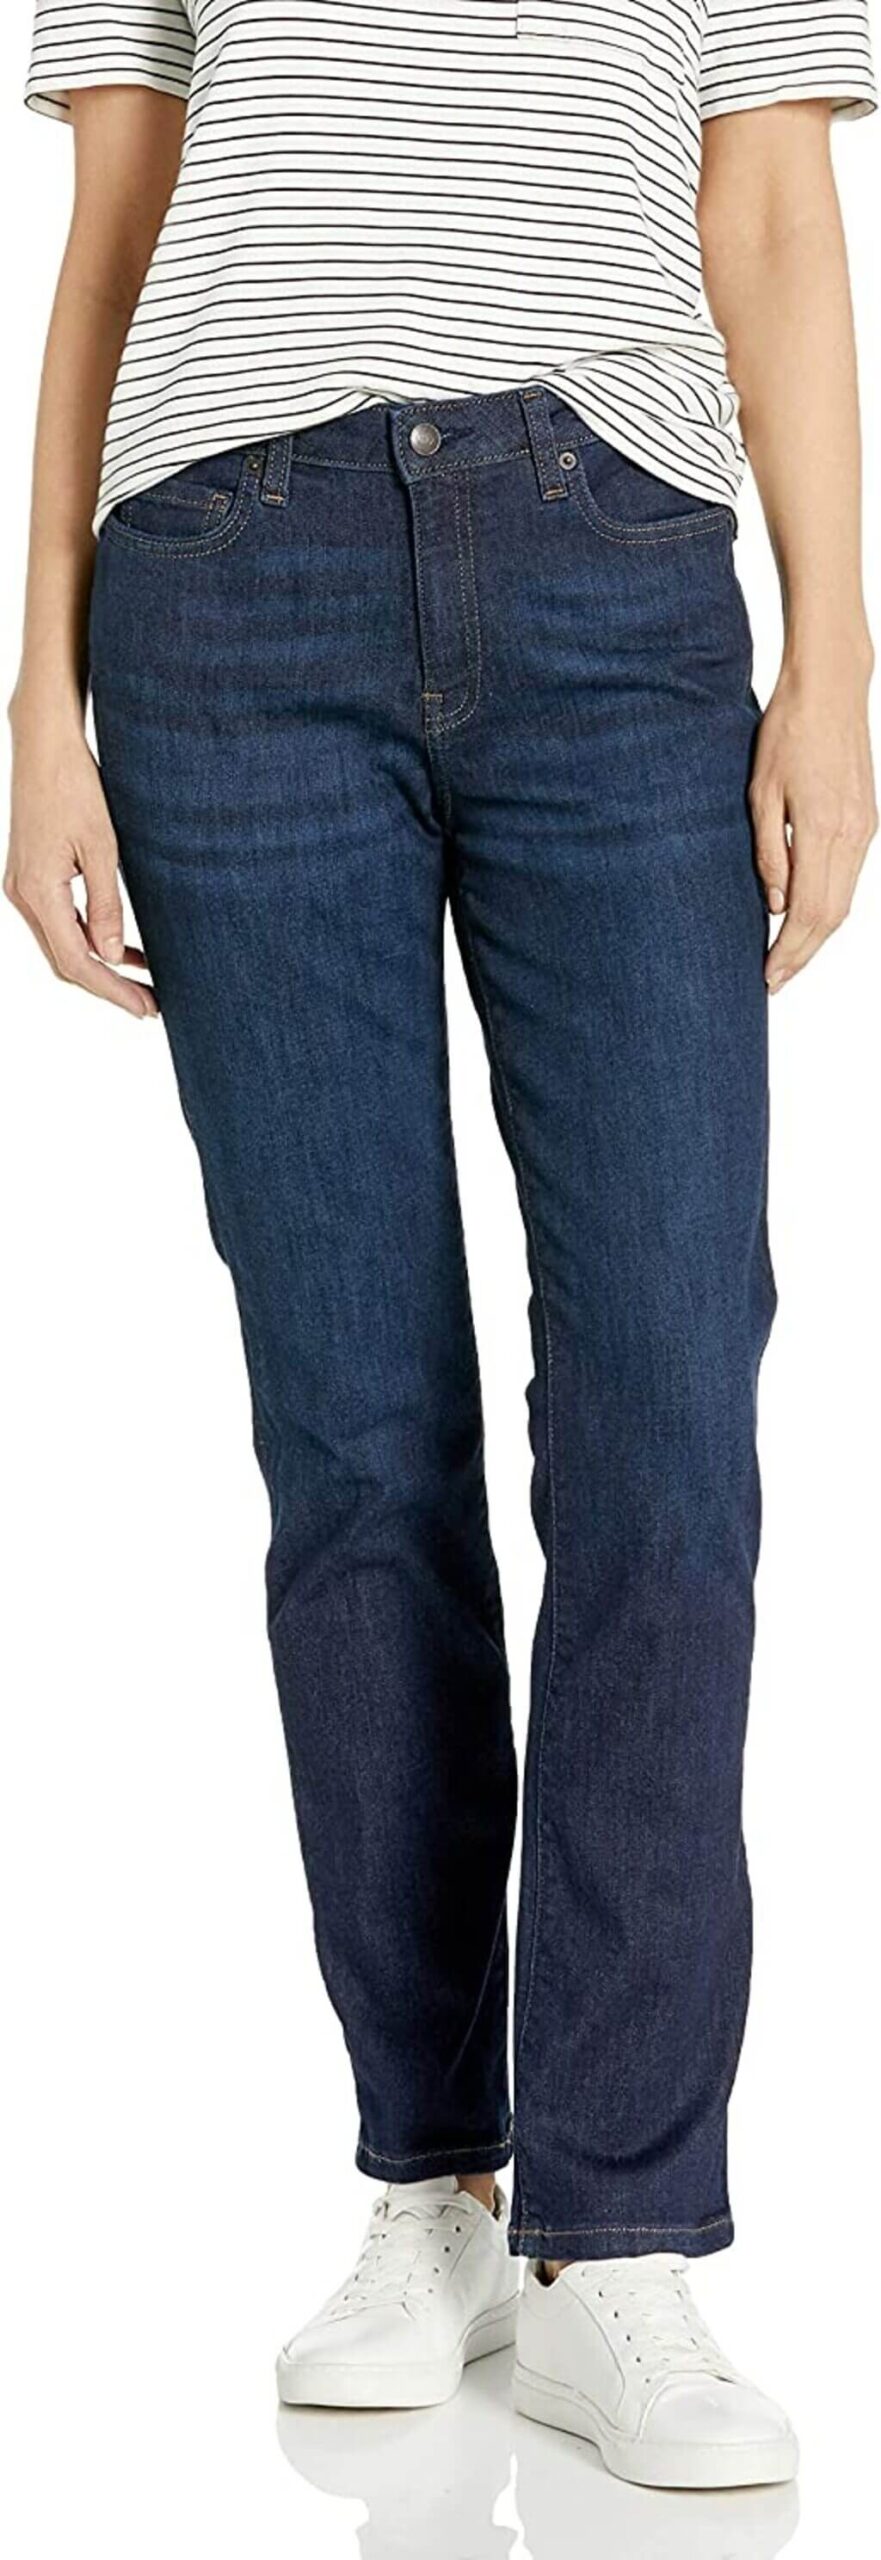 Amazon Essentials Straight Leg Jeans Women’s Slim-Fit